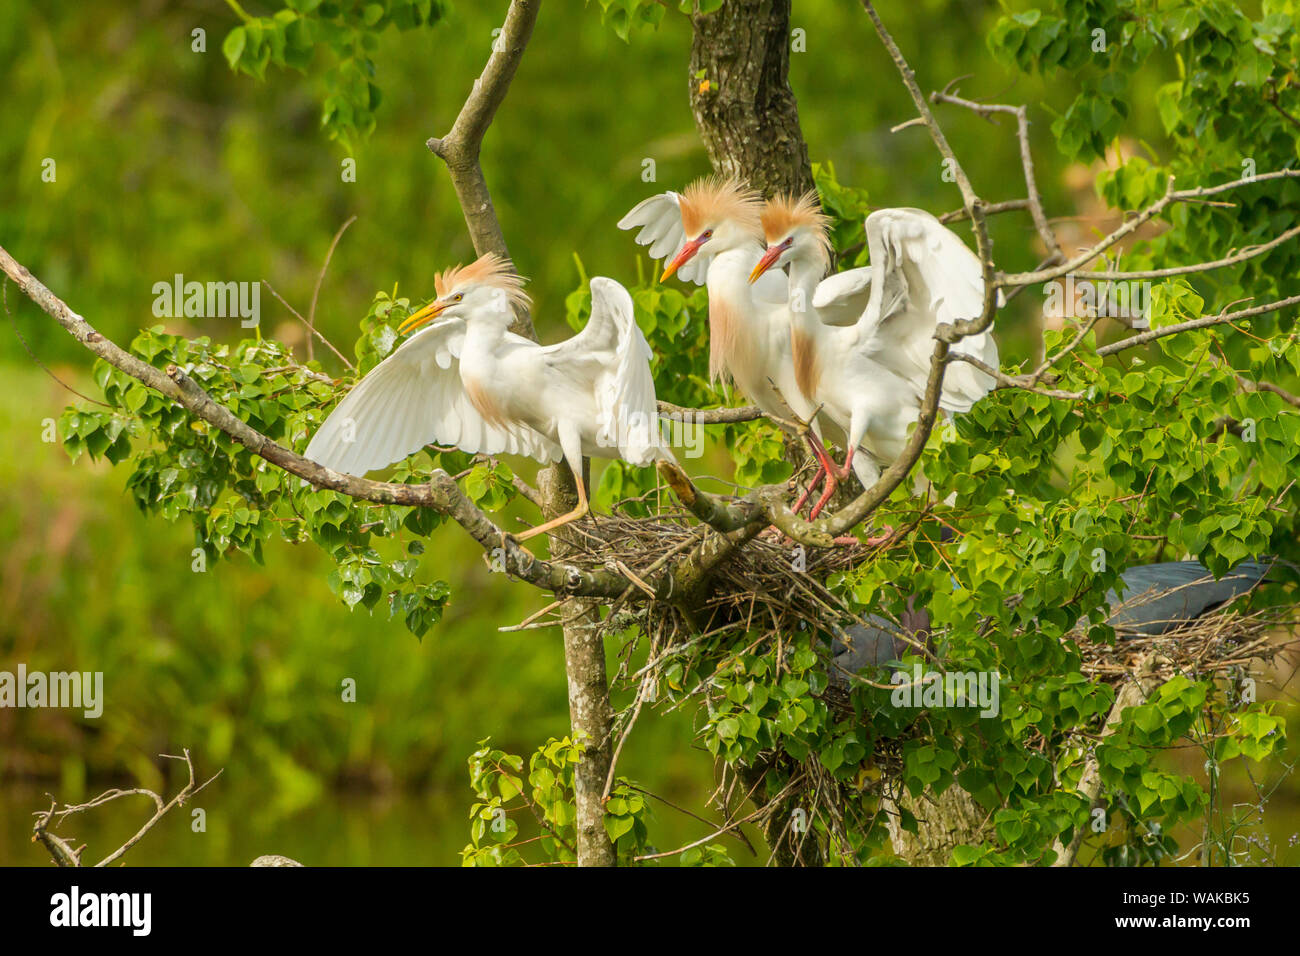 USA, Louisiana, Vermilion Parish. Cattle egrets fighting. Credit as: Cathy and Gordon Illg / Jaynes Gallery / DanitaDelimont.com Stock Photo